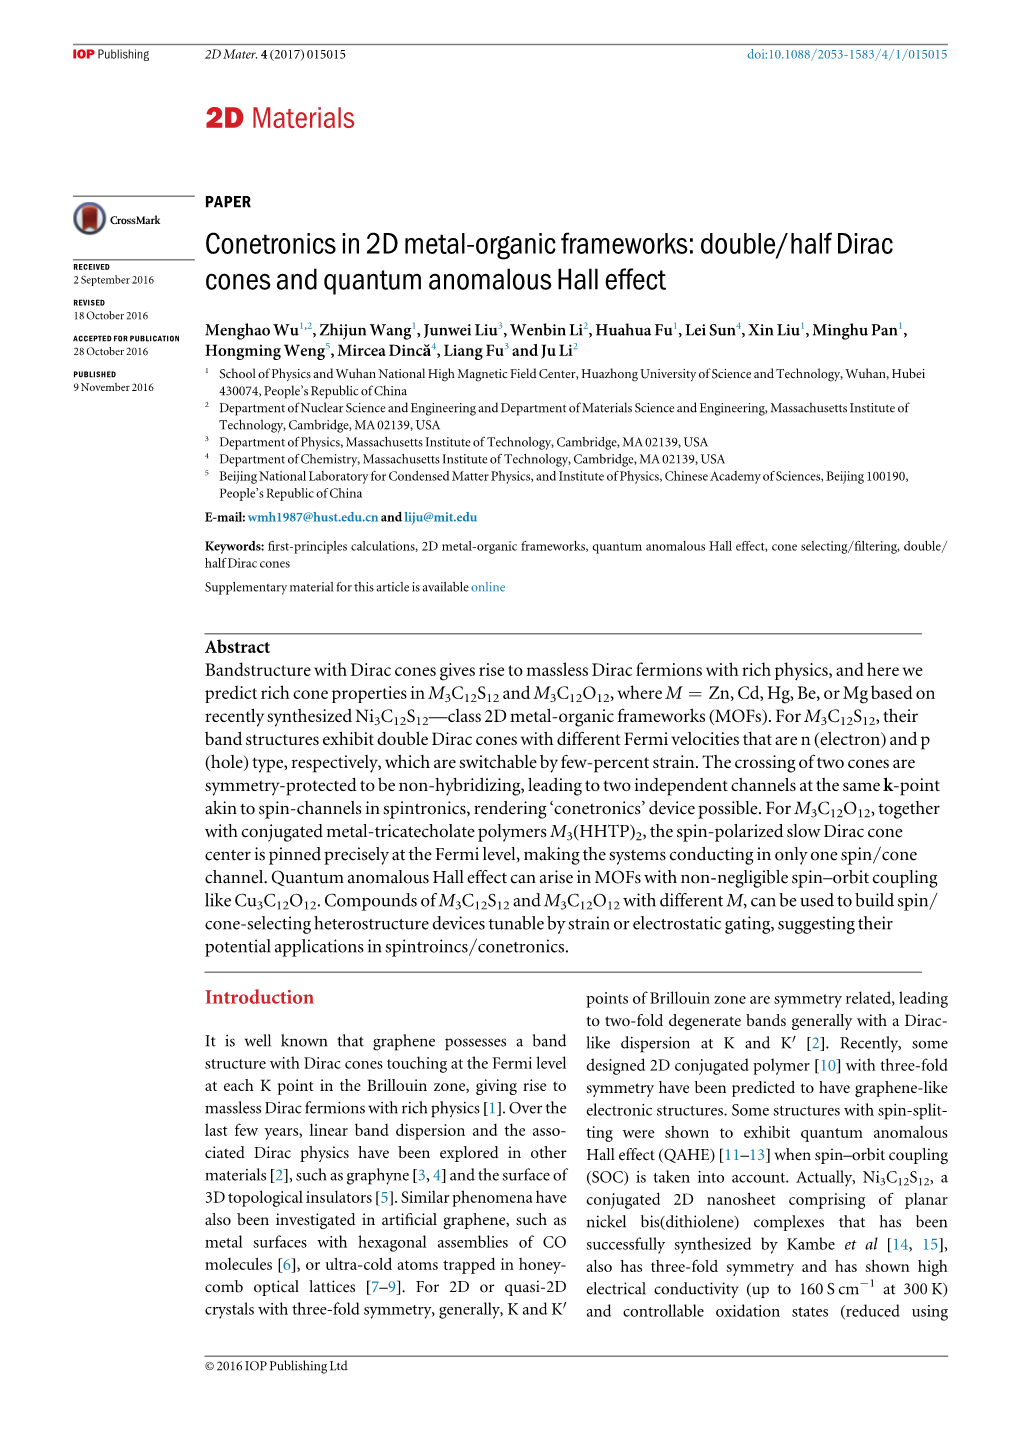 Conetronics in 2D Metal-Organic Frameworks: Double/Half Dirac